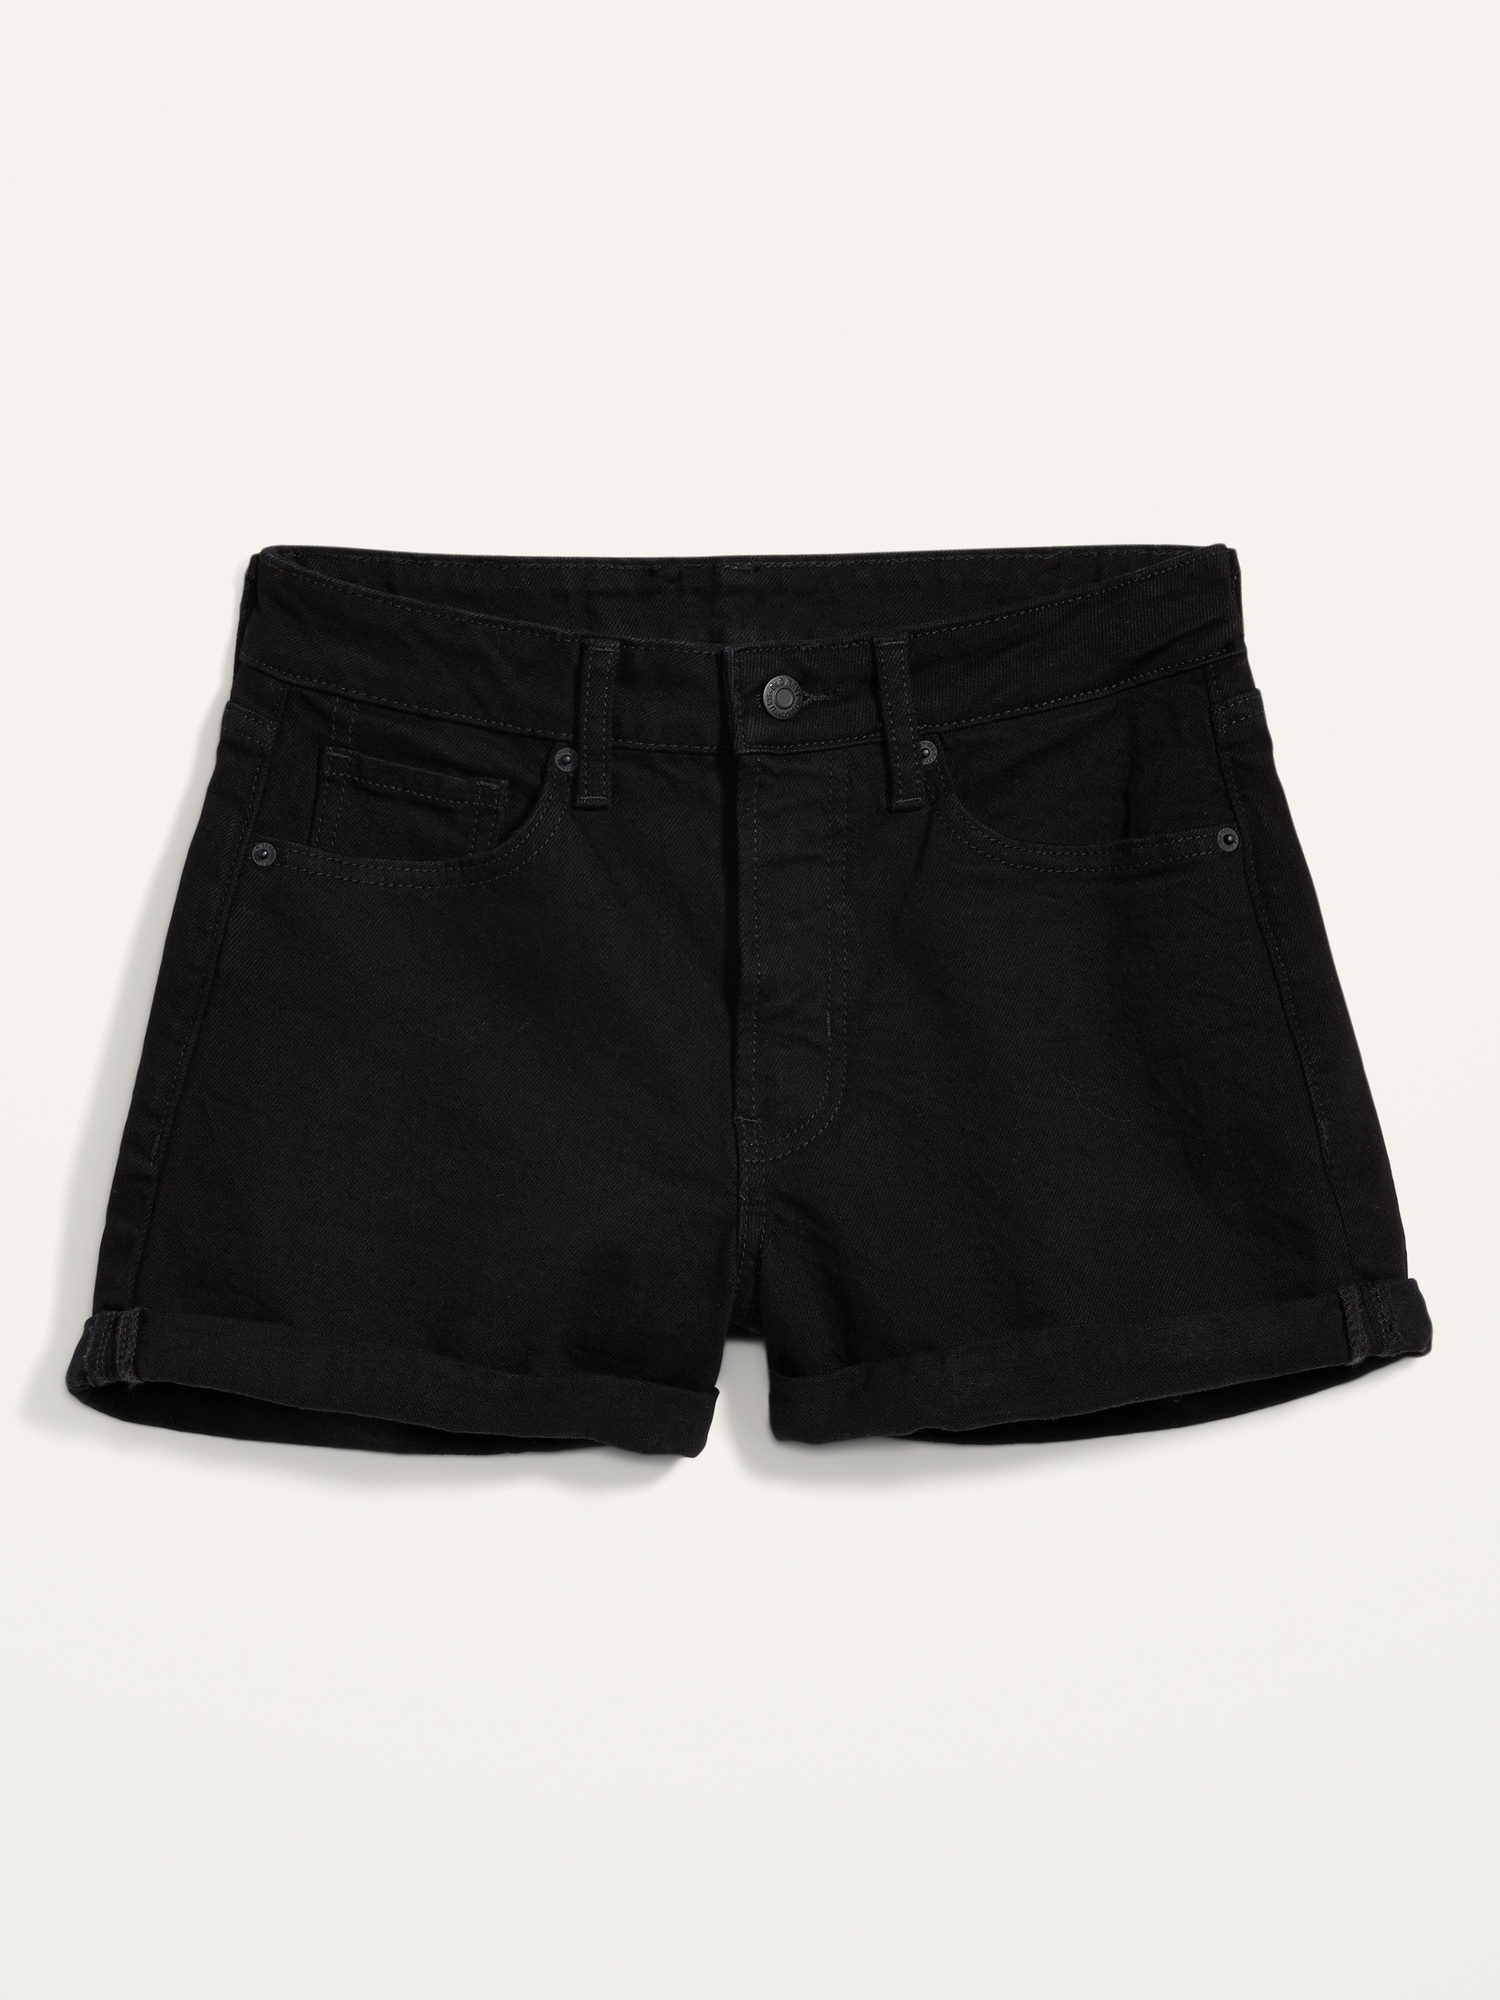 High-Waisted O.G. Cuffed Black Jean Shorts for Women -- 3-inch inseam ...